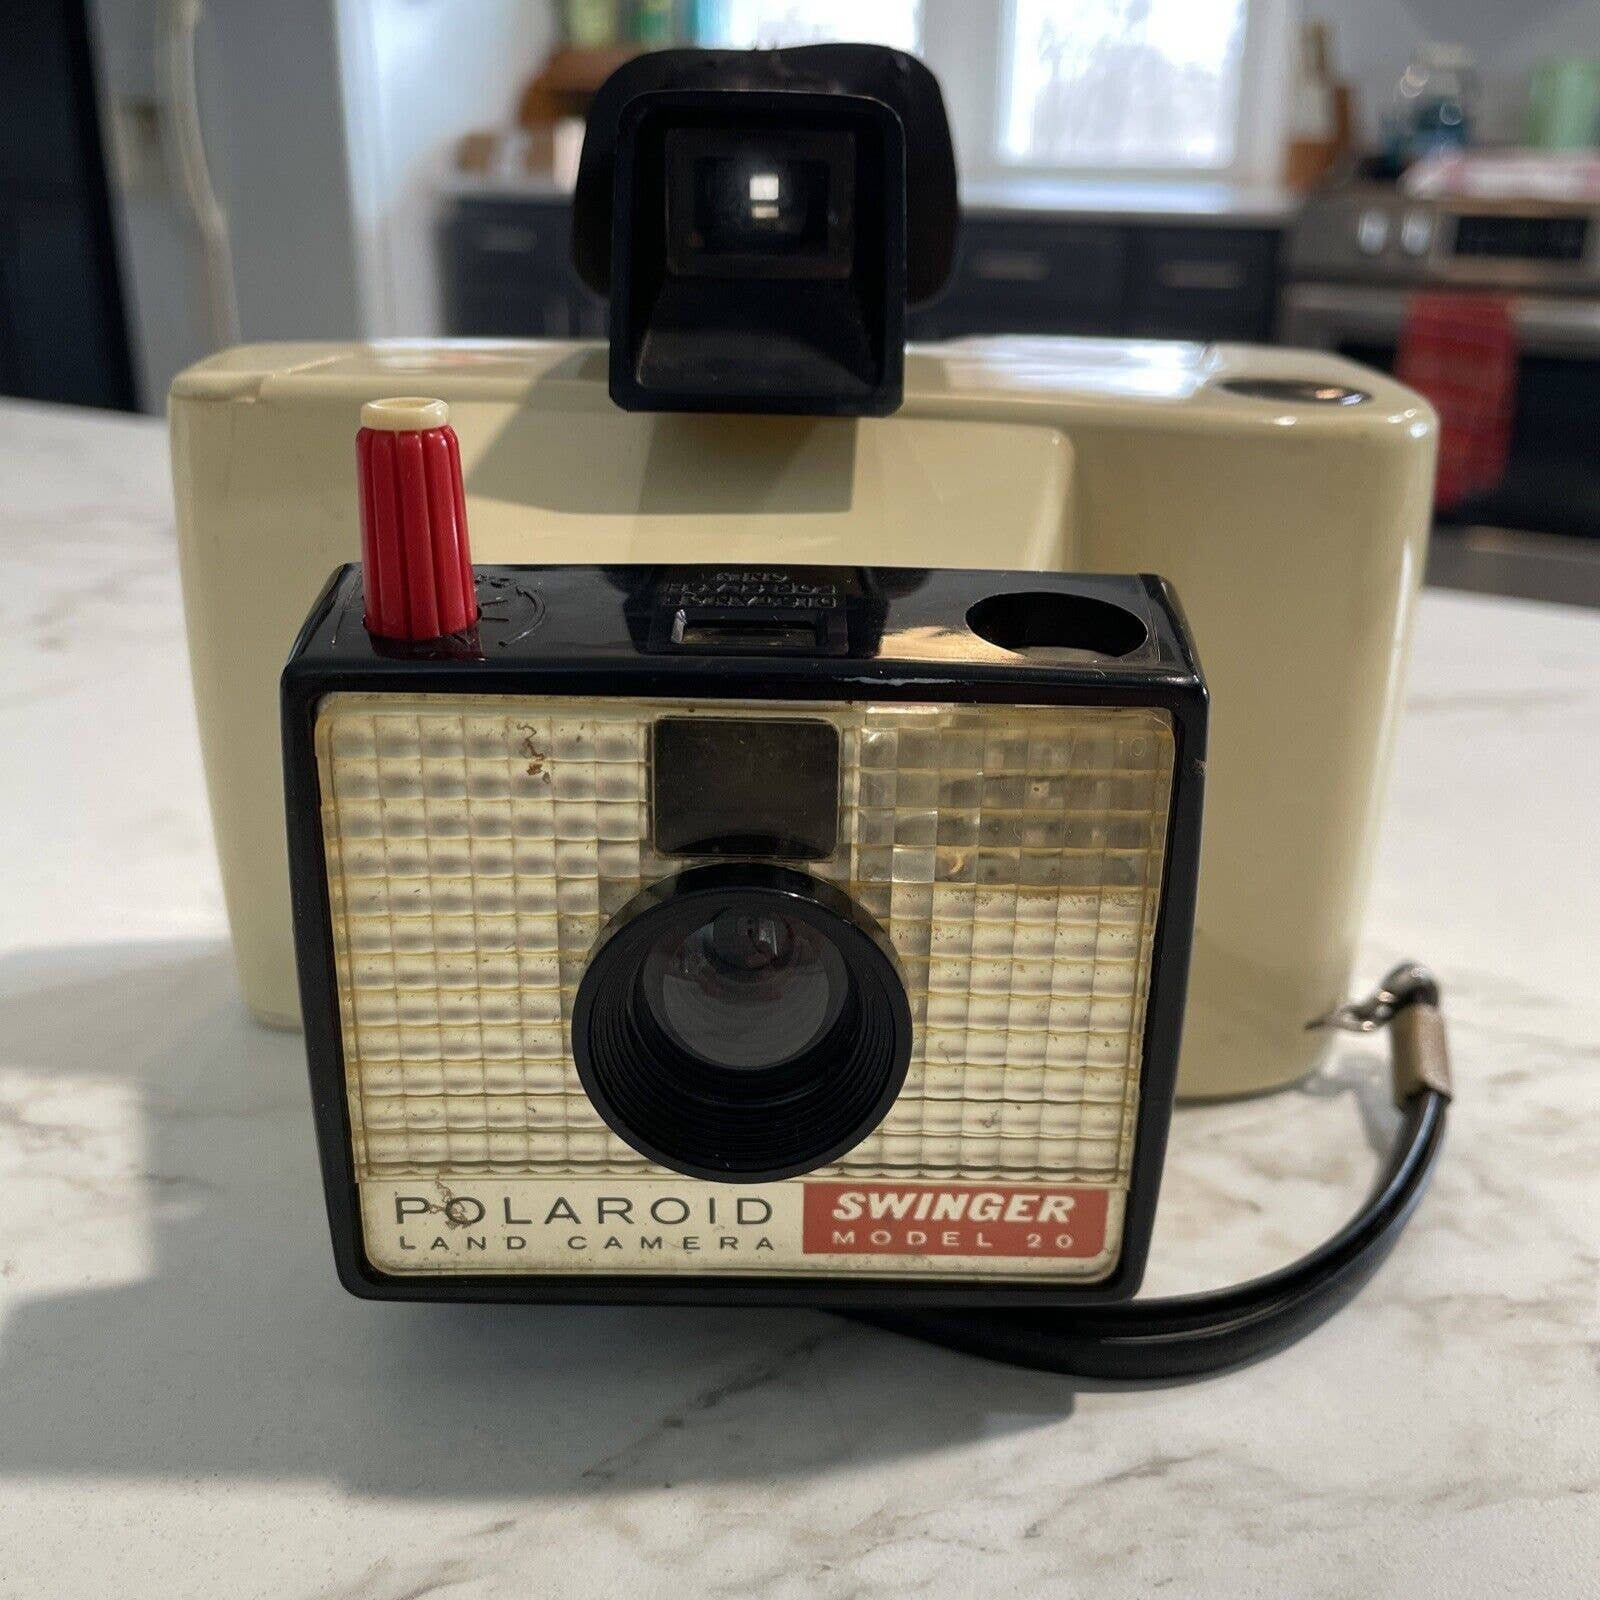 Polaroid Swinger photo